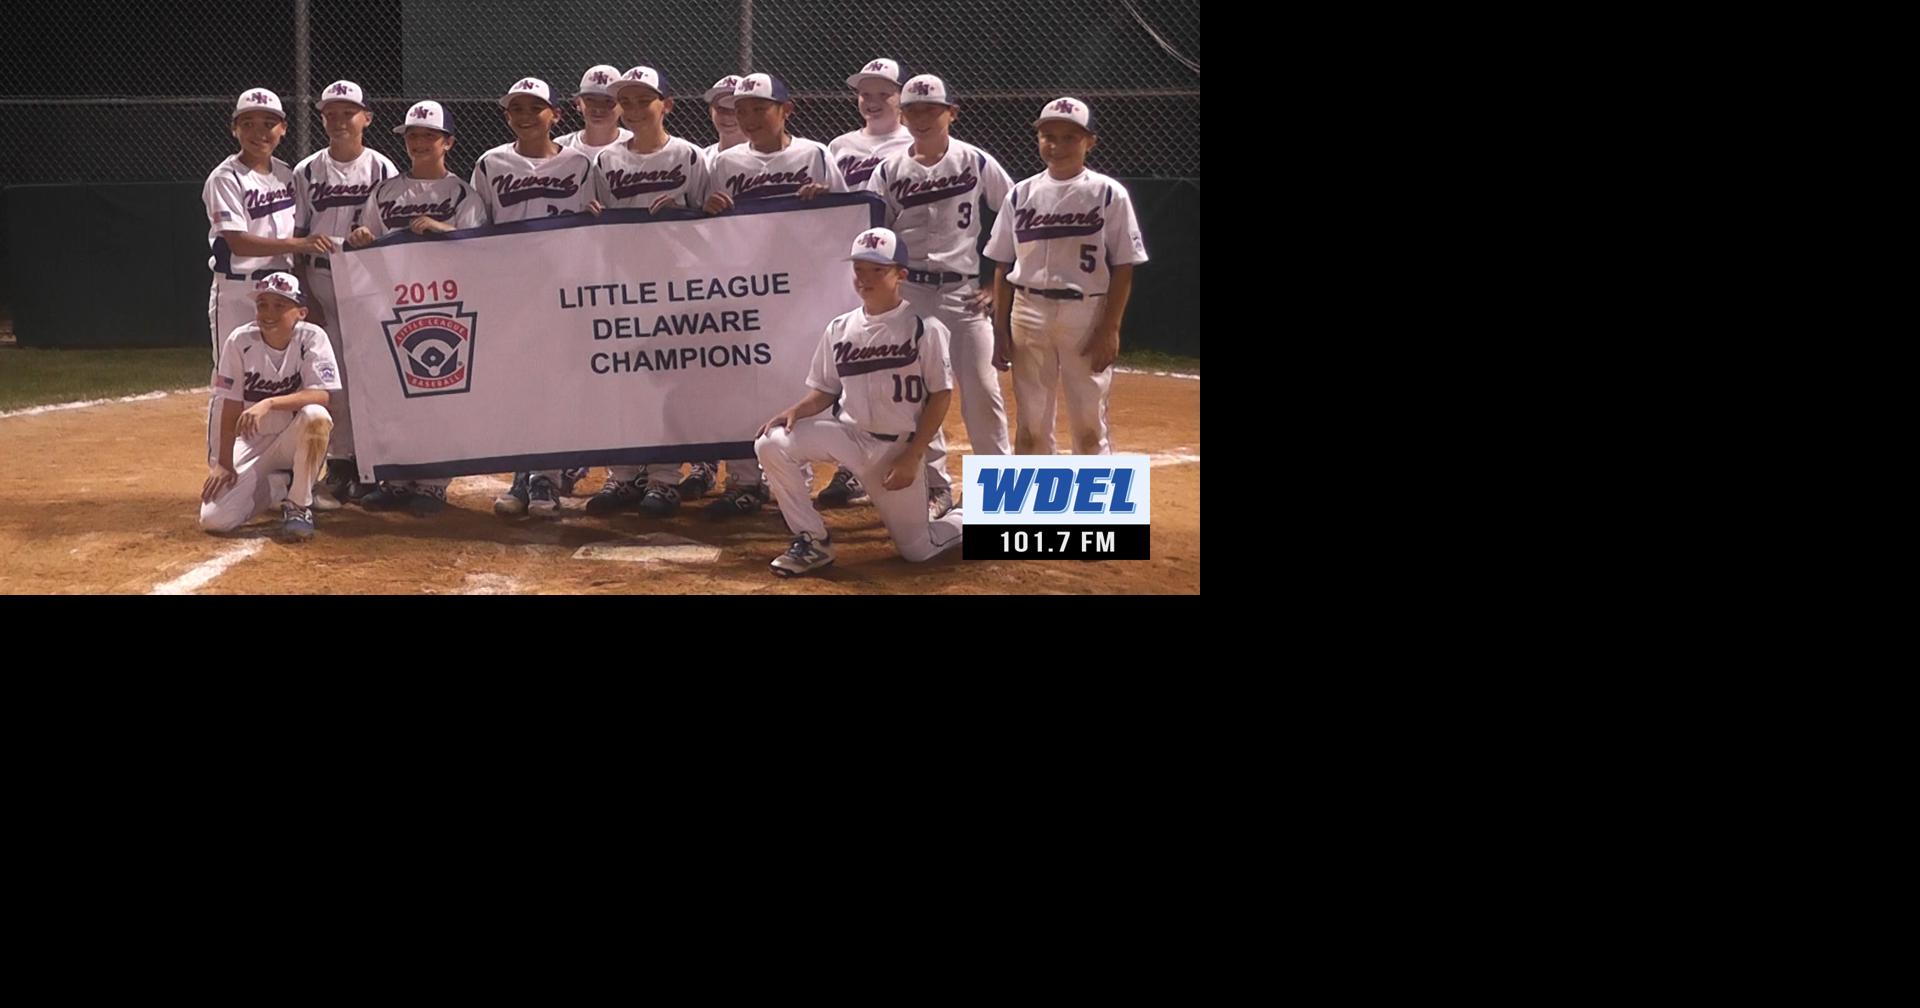 2019 Delaware Little League champions, Newark National